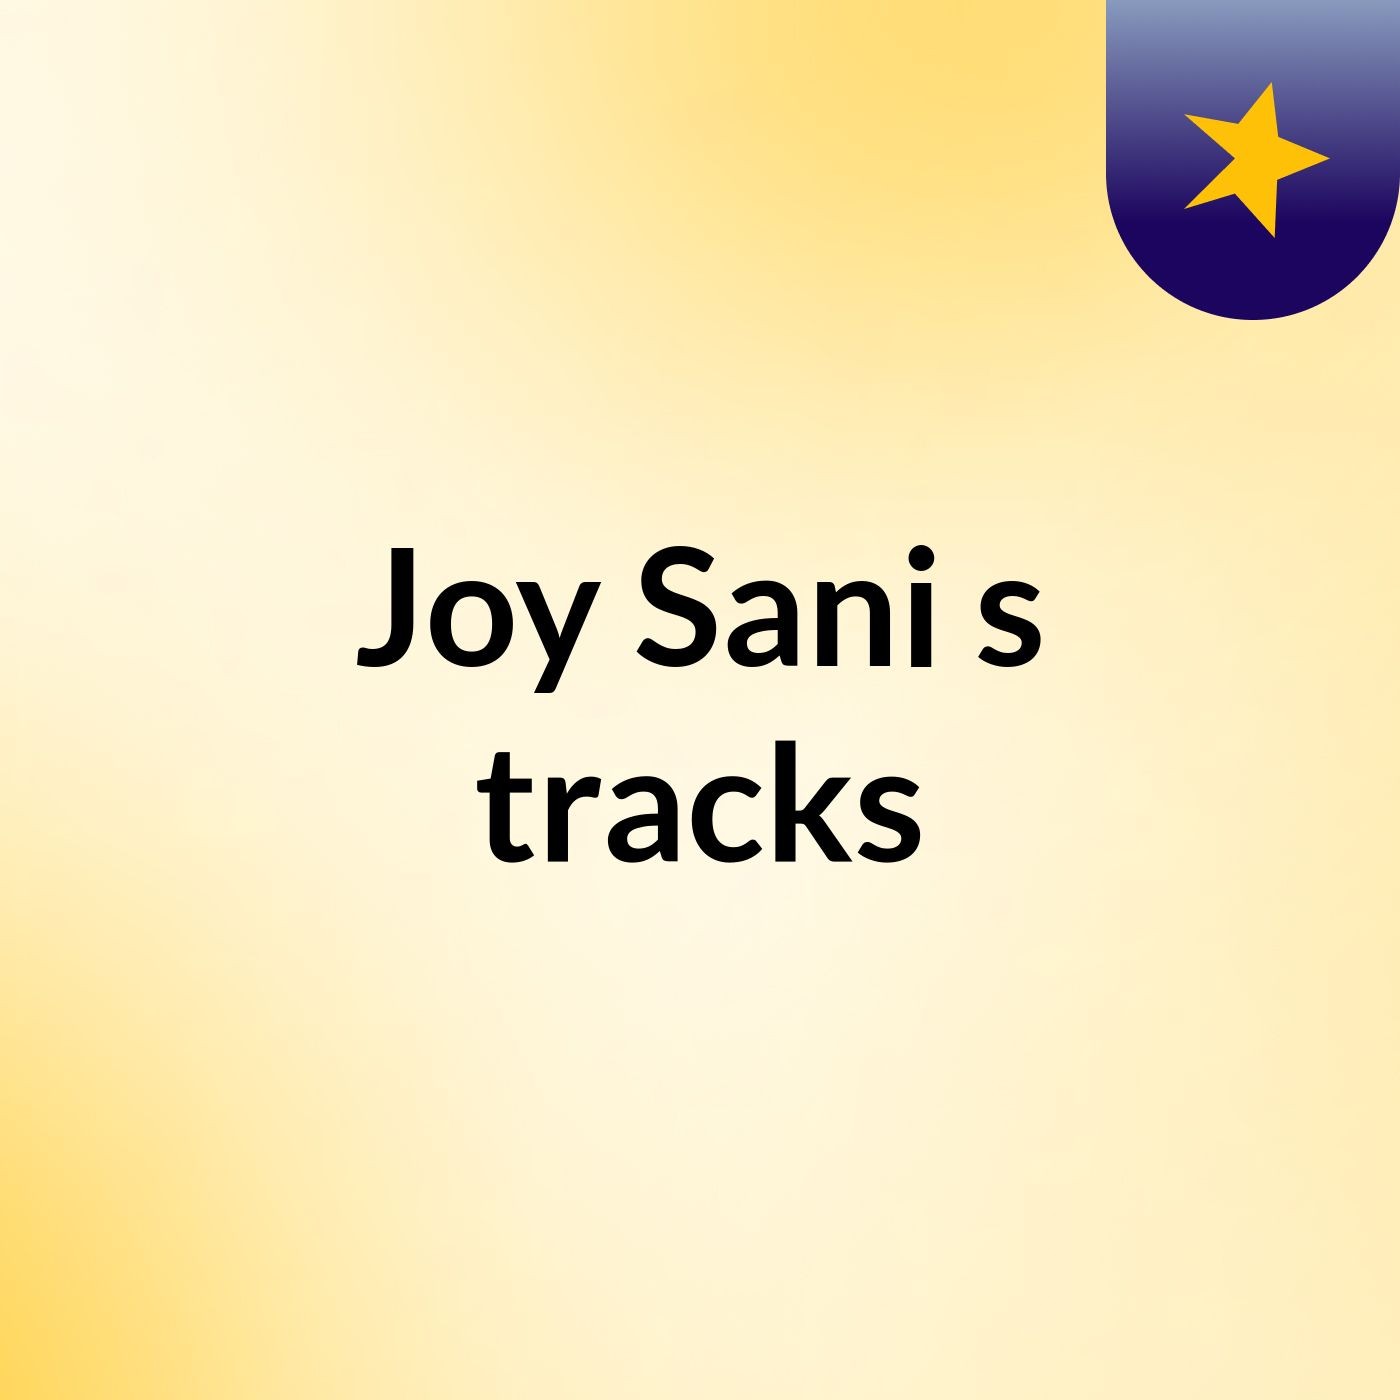 Joy Sani's tracks